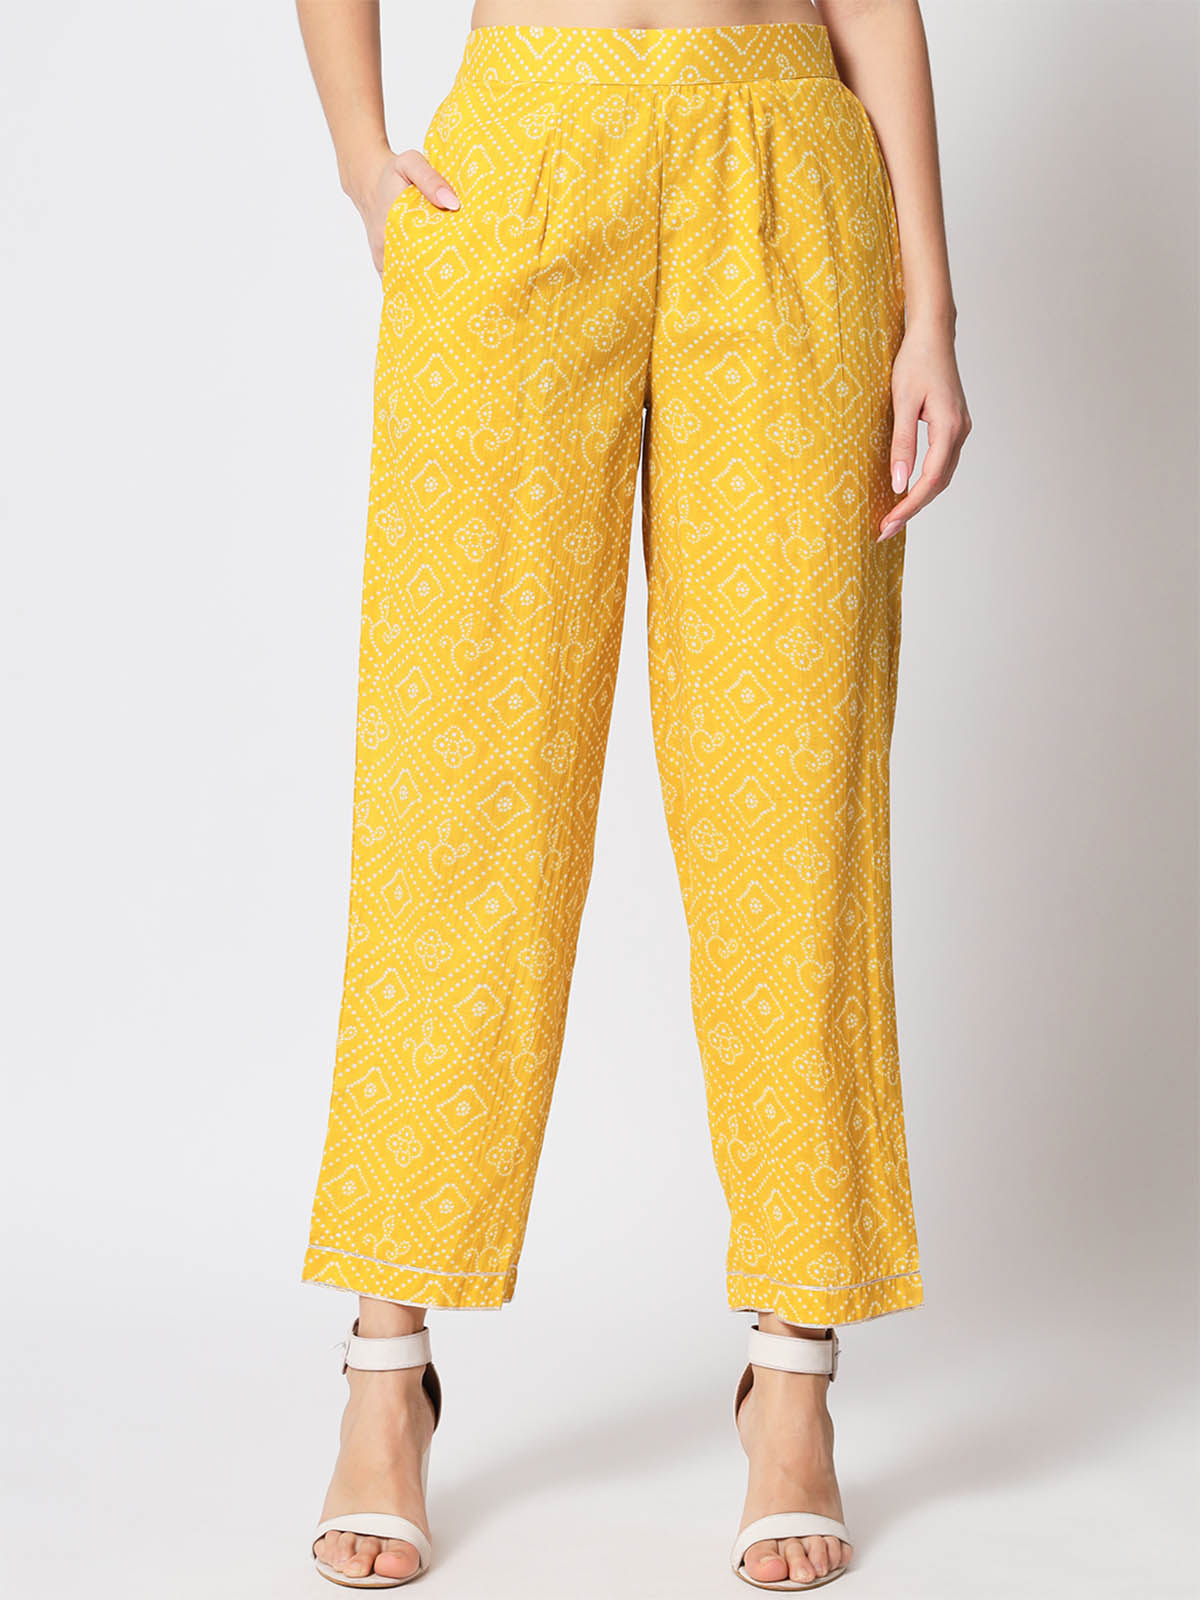 Odette - Beautiful Yellow Cotton Printed Stitched Pant